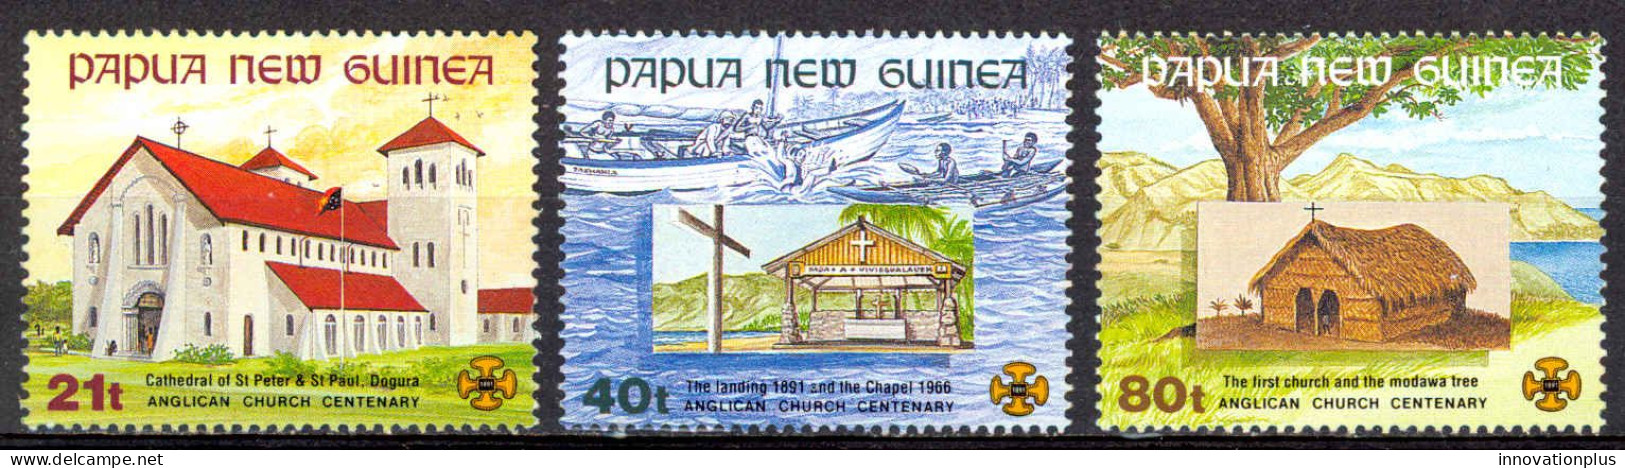 Papua New Guinea Sc# 775-777 MNH 1991 Churches - Papua New Guinea